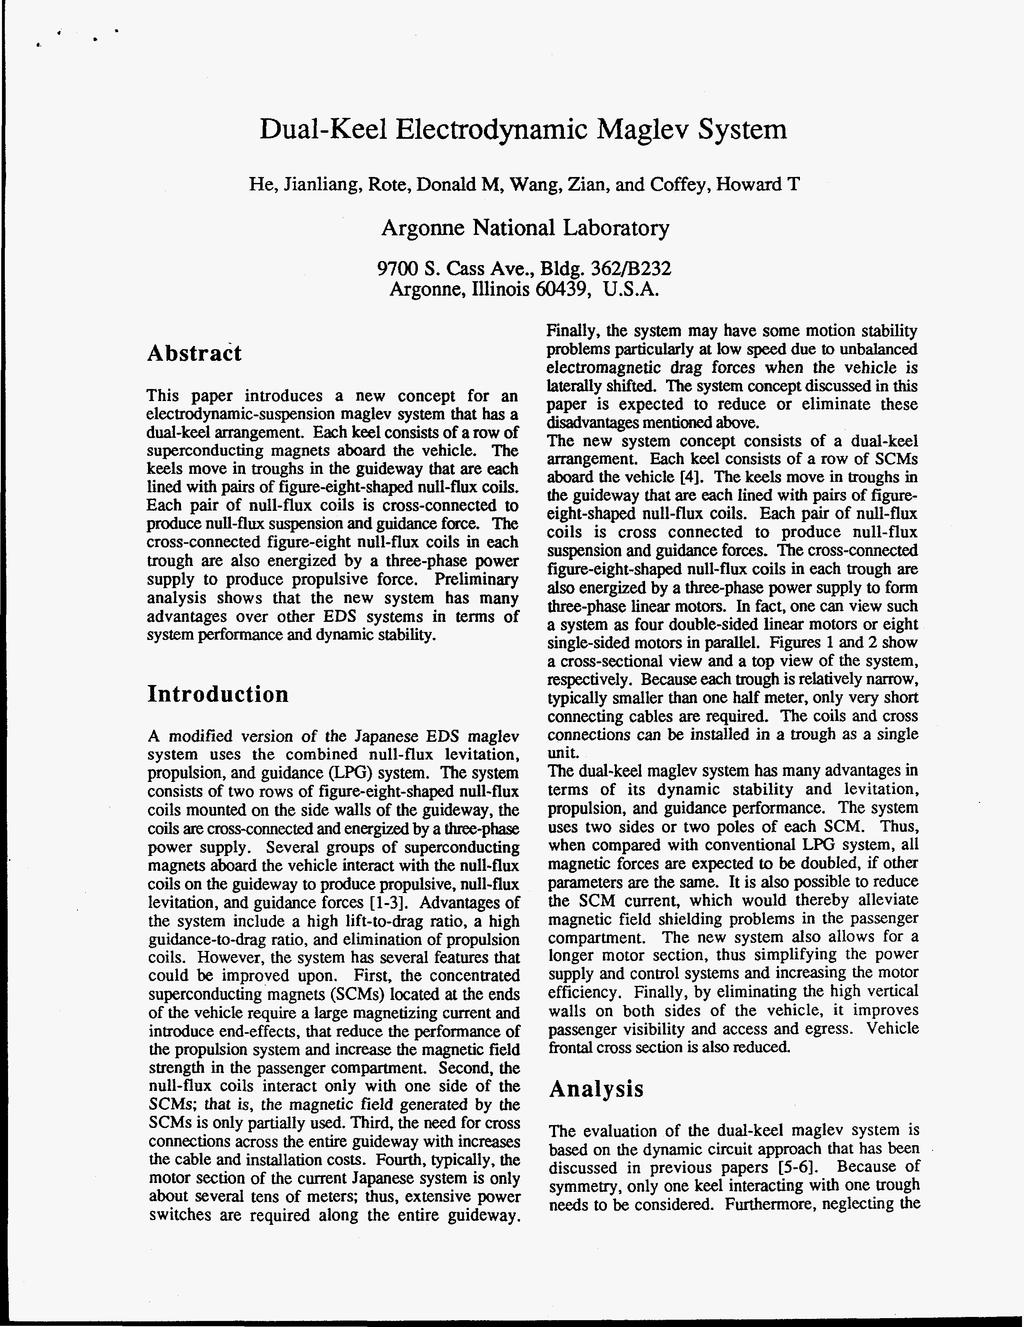 Dual-Keel Electrodynamic Maglev System He, Jianliang, Rote, Donald M, Wang,Zian, and Coffey, Howard T Ar